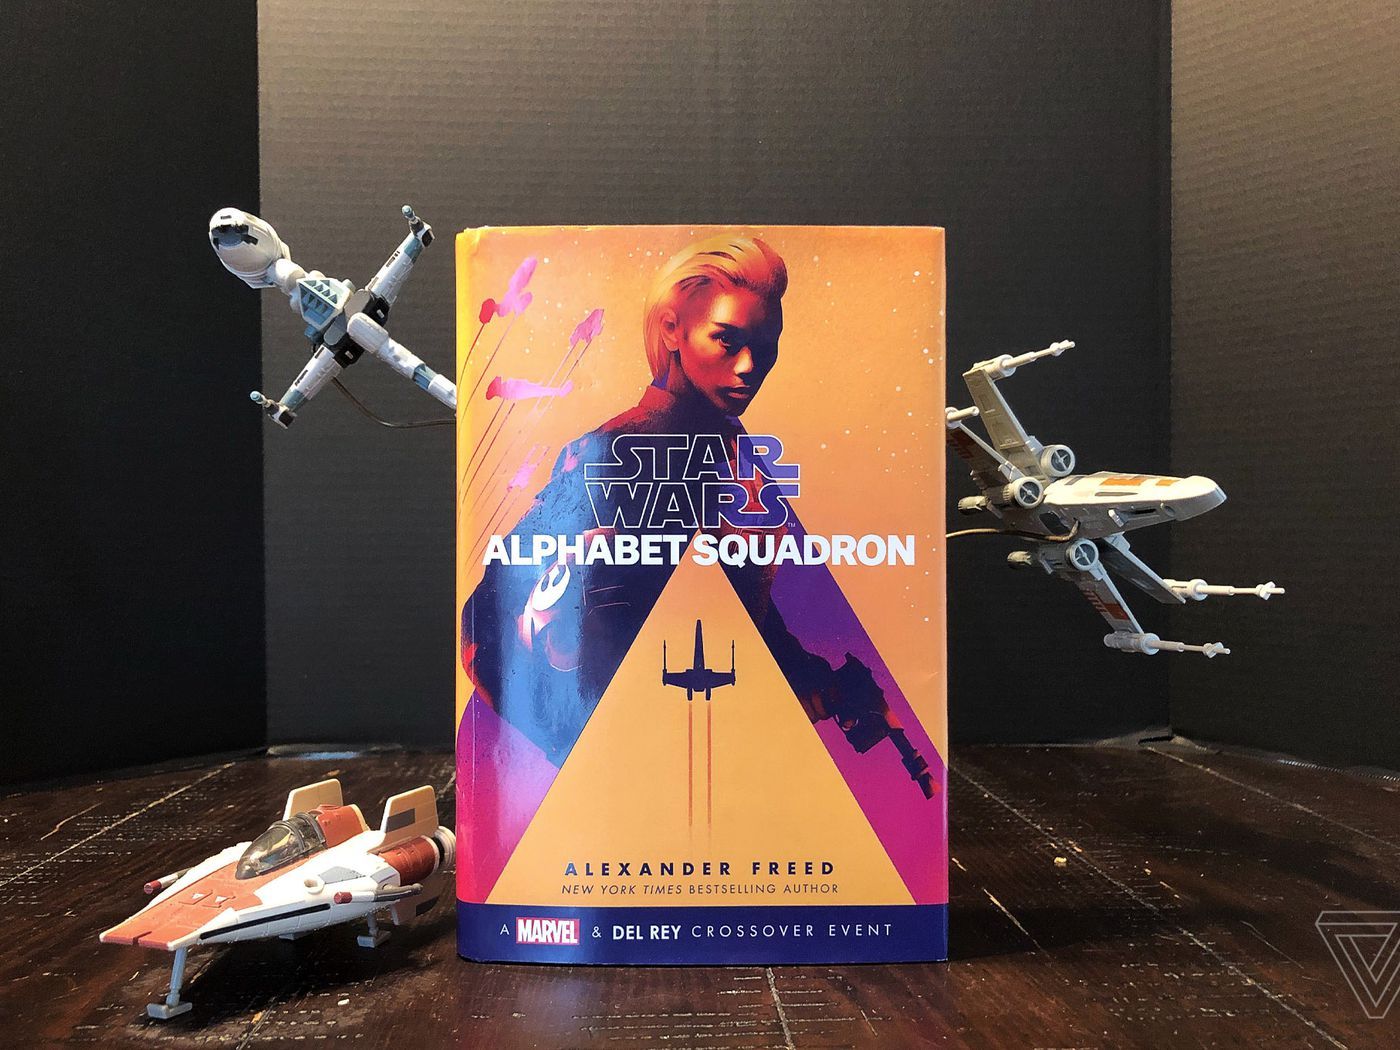 Star Wars: Alphabet Squadron is a thrilling examination